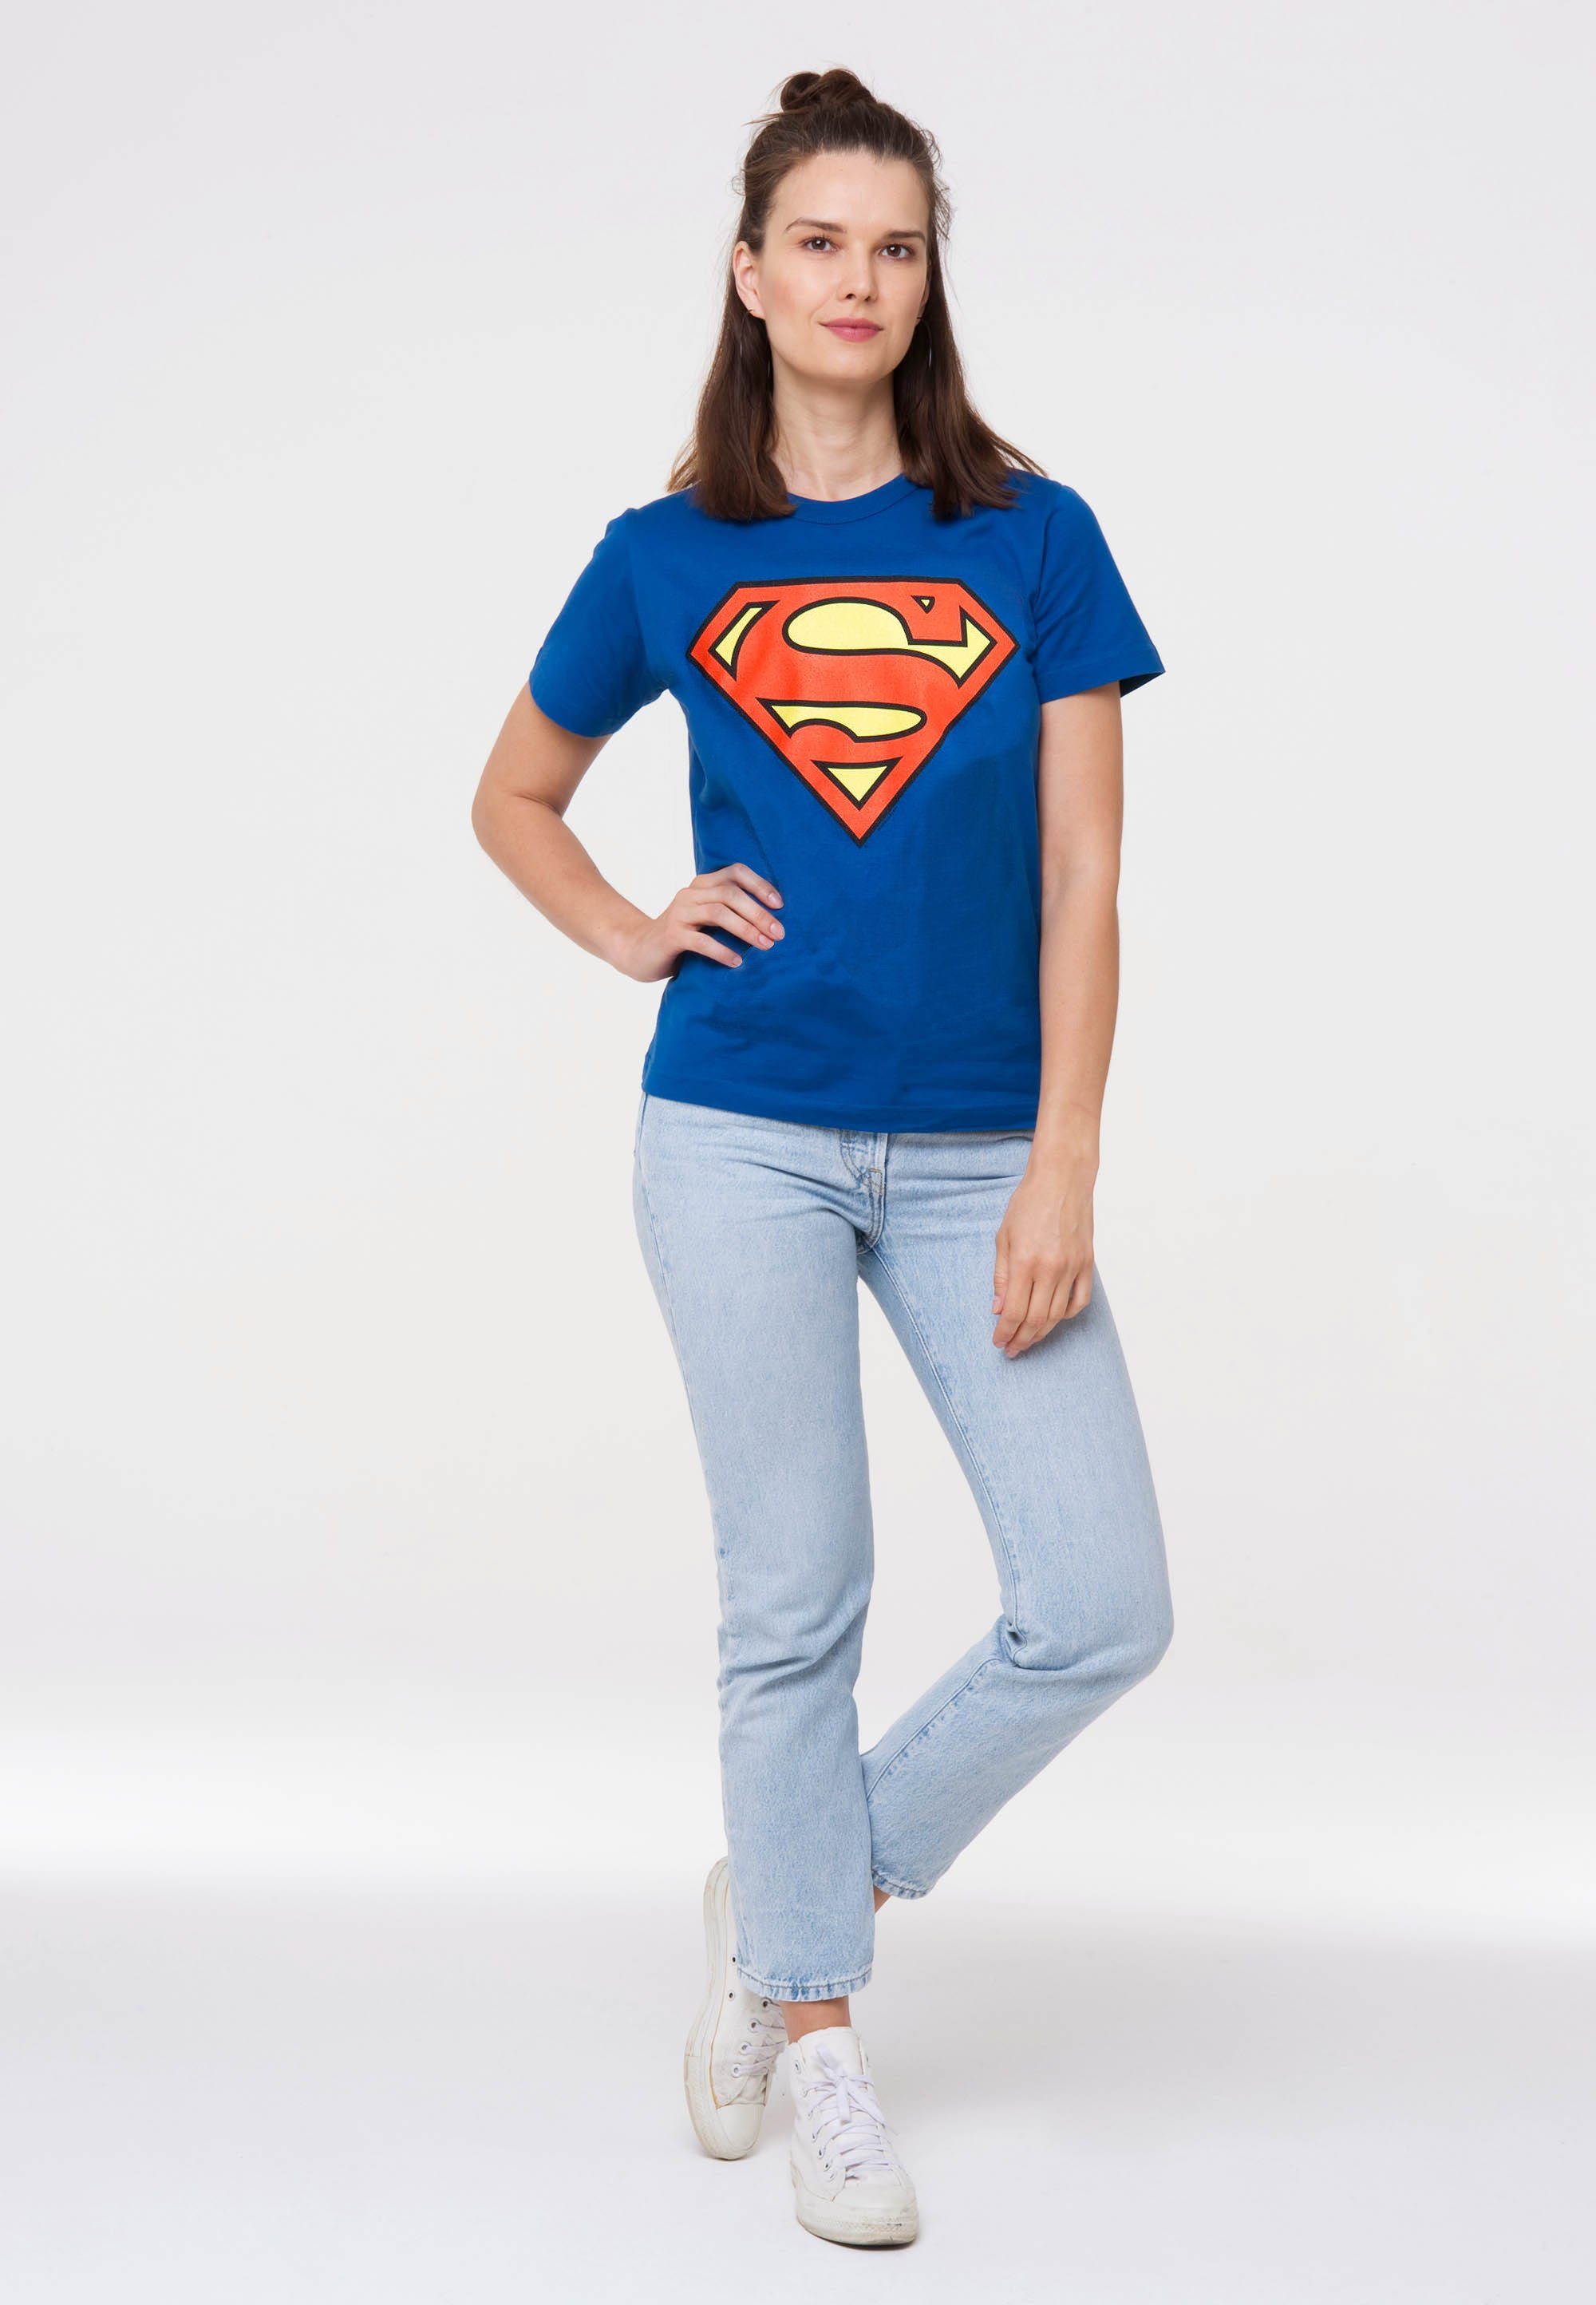 Top-Produktionsqualität LOGOSHIRT T-Shirt Superman Logo blau trendigem Superhelden-Print mit